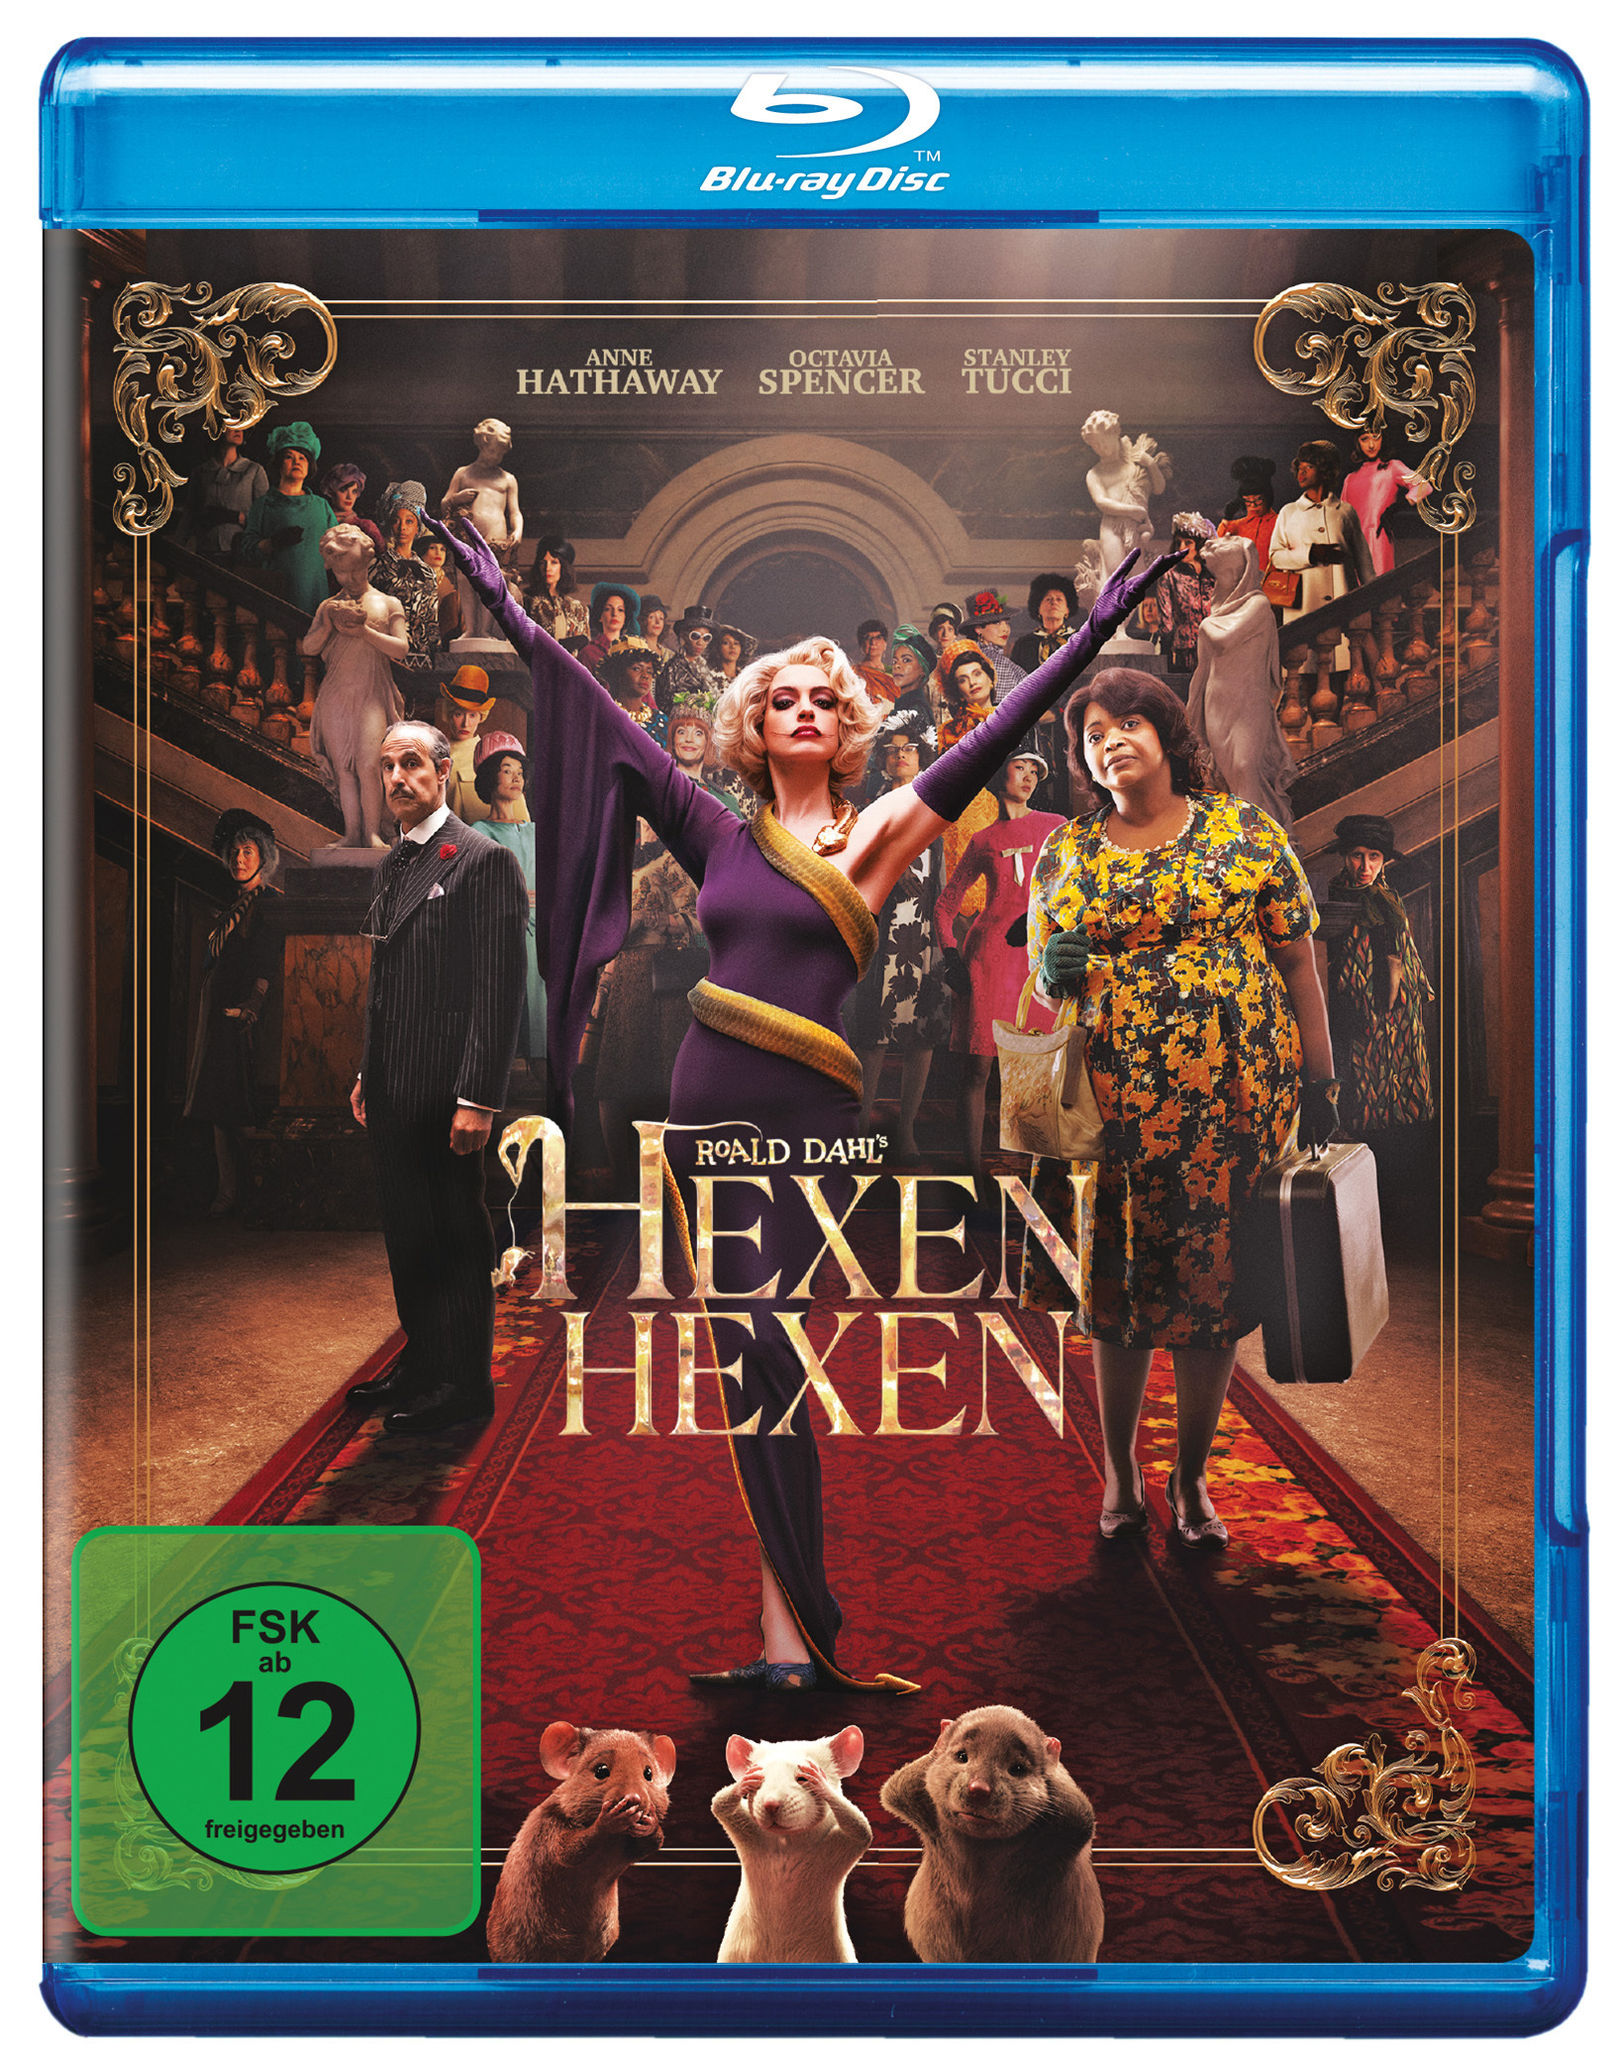 Hexen hexen 2020 Blu-ray jetzt im Weltbild.ch Shop bestellen